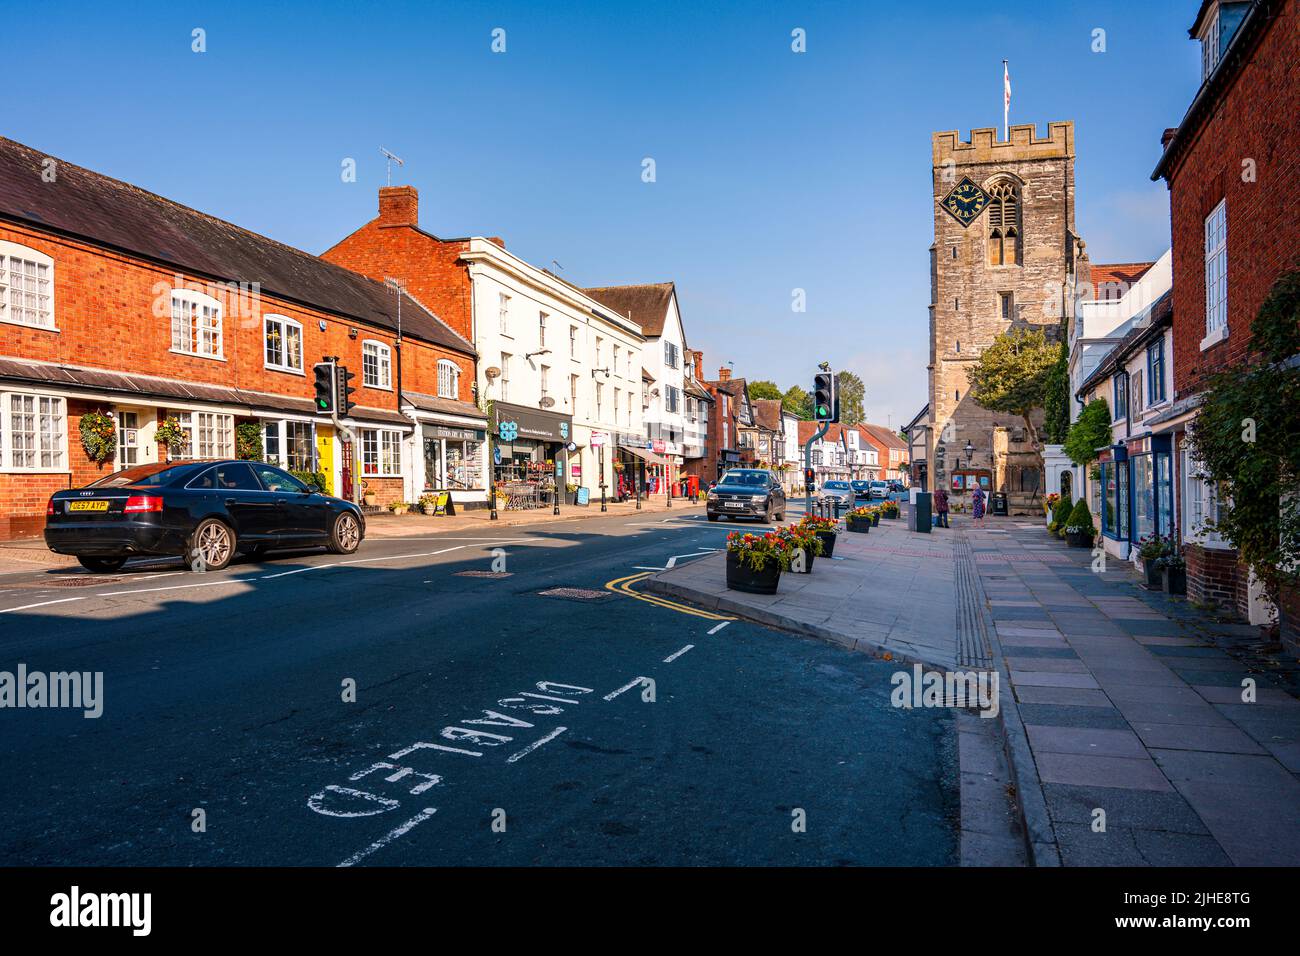 St John the Baptist Church clock tower high street Henley in Arden Warwickshire England UK Stock Photo